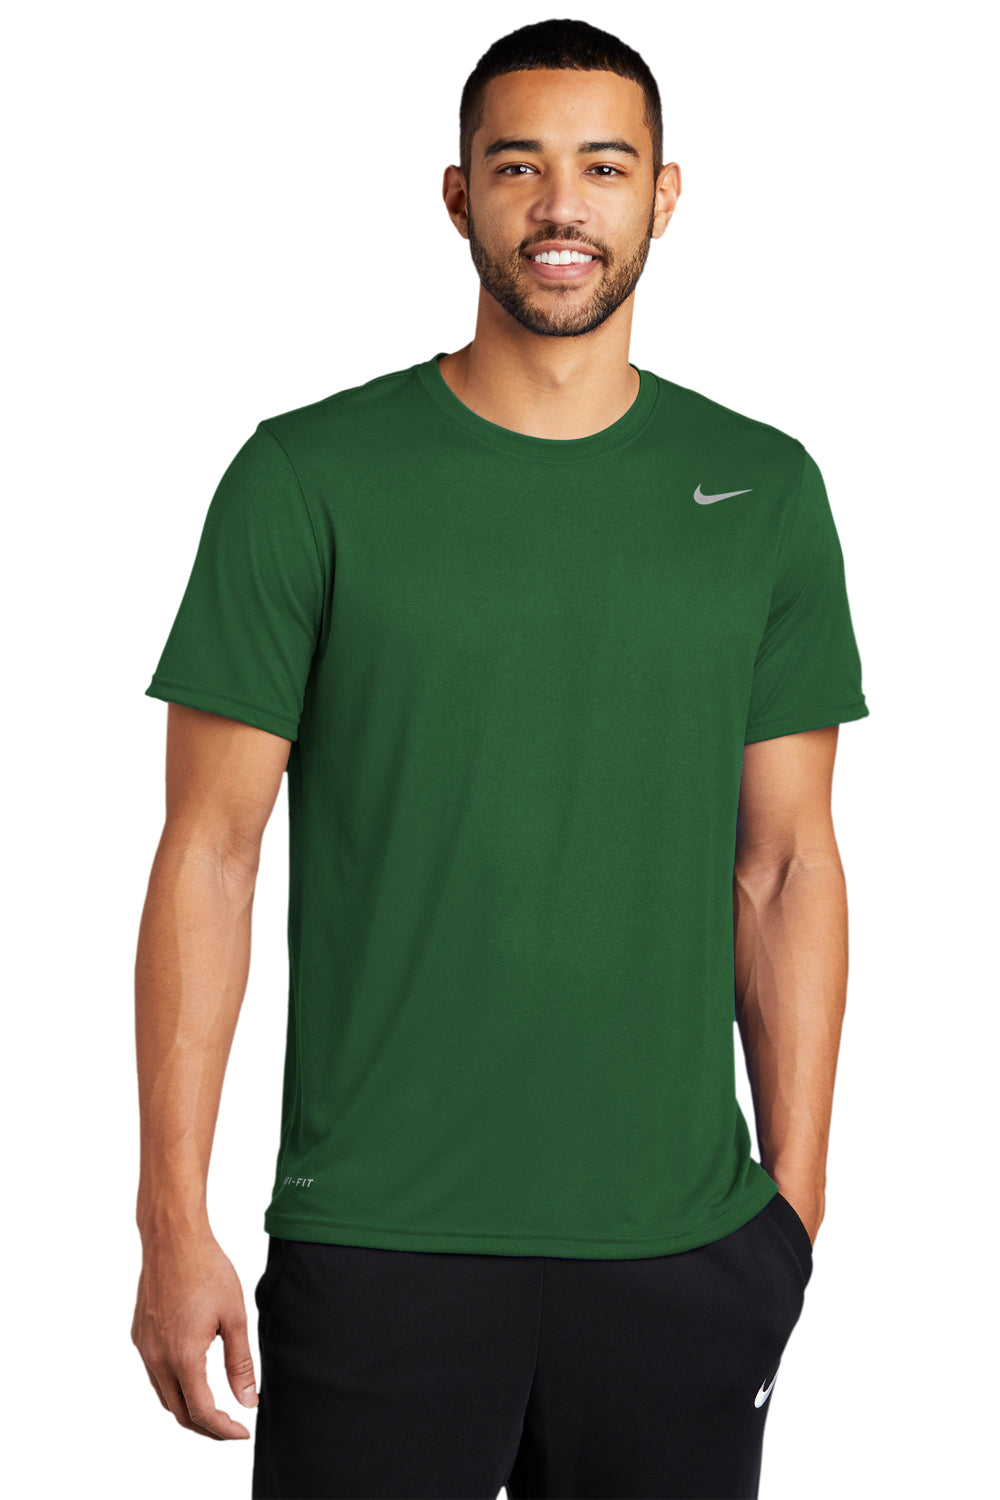  Nike Mens Dri-FIT Team Issue Polo (Gorge Green/White